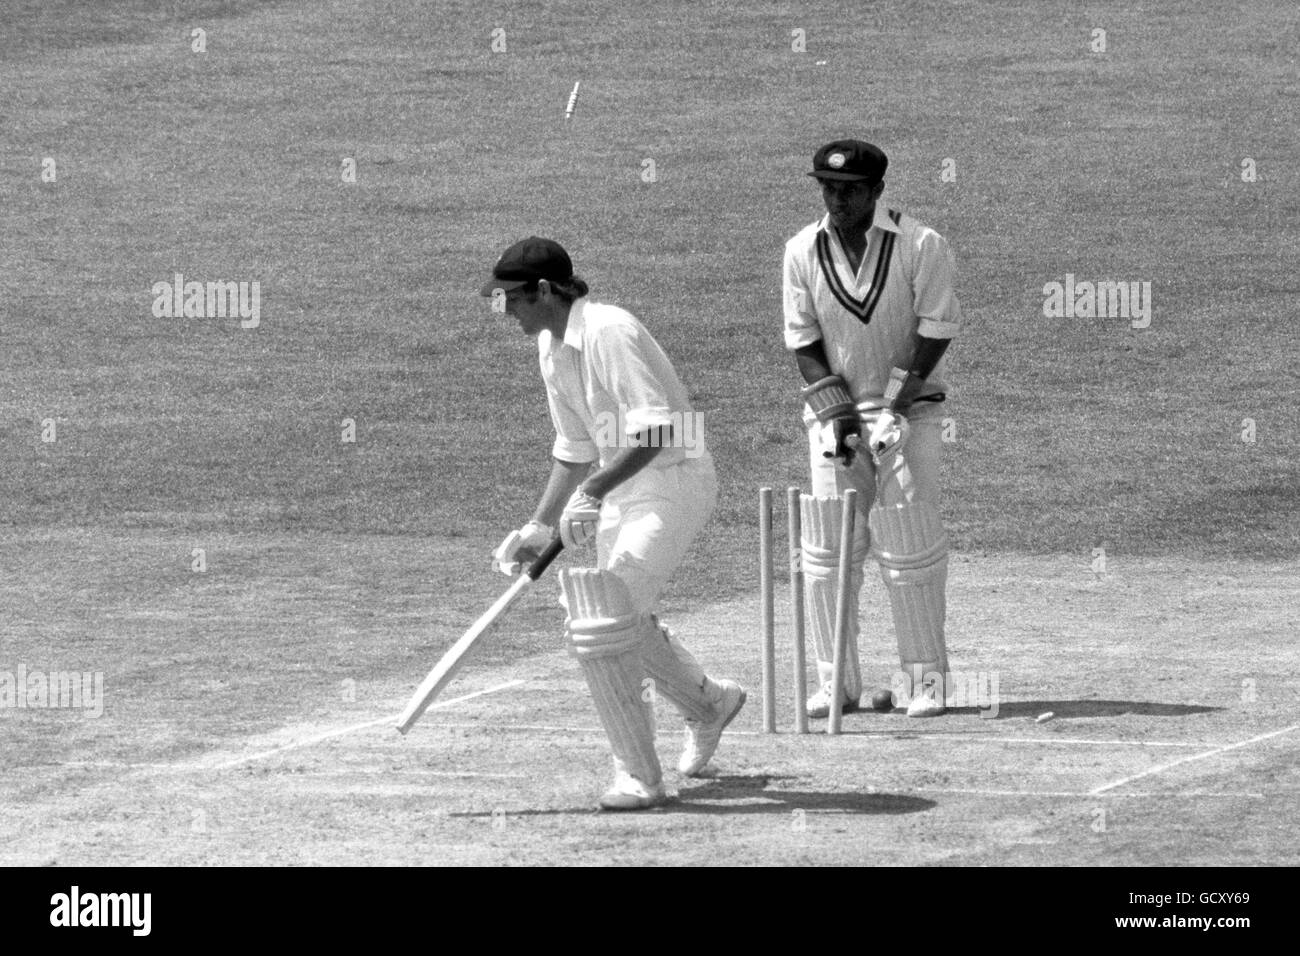 Rick McCosker (Australia) bowled by Somachandra de Silva (Sri Lanka) for 73 runs. The wicketkeeper is Ranjit Fernando. Stock Photo